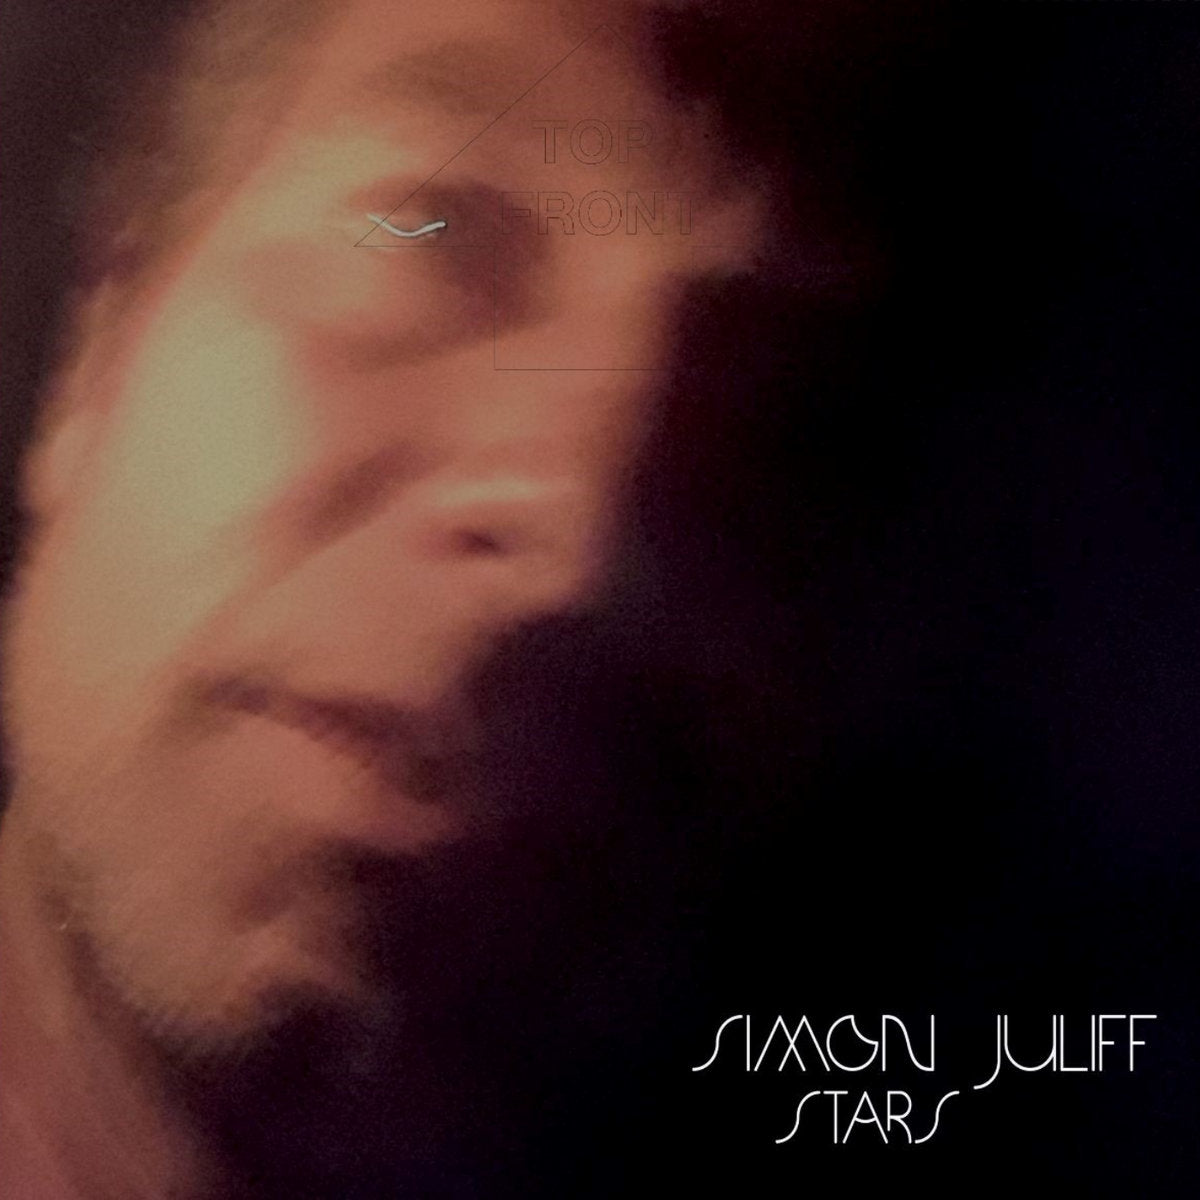 Arcade Sound - Simon Juliff - Stars - CD / LP image